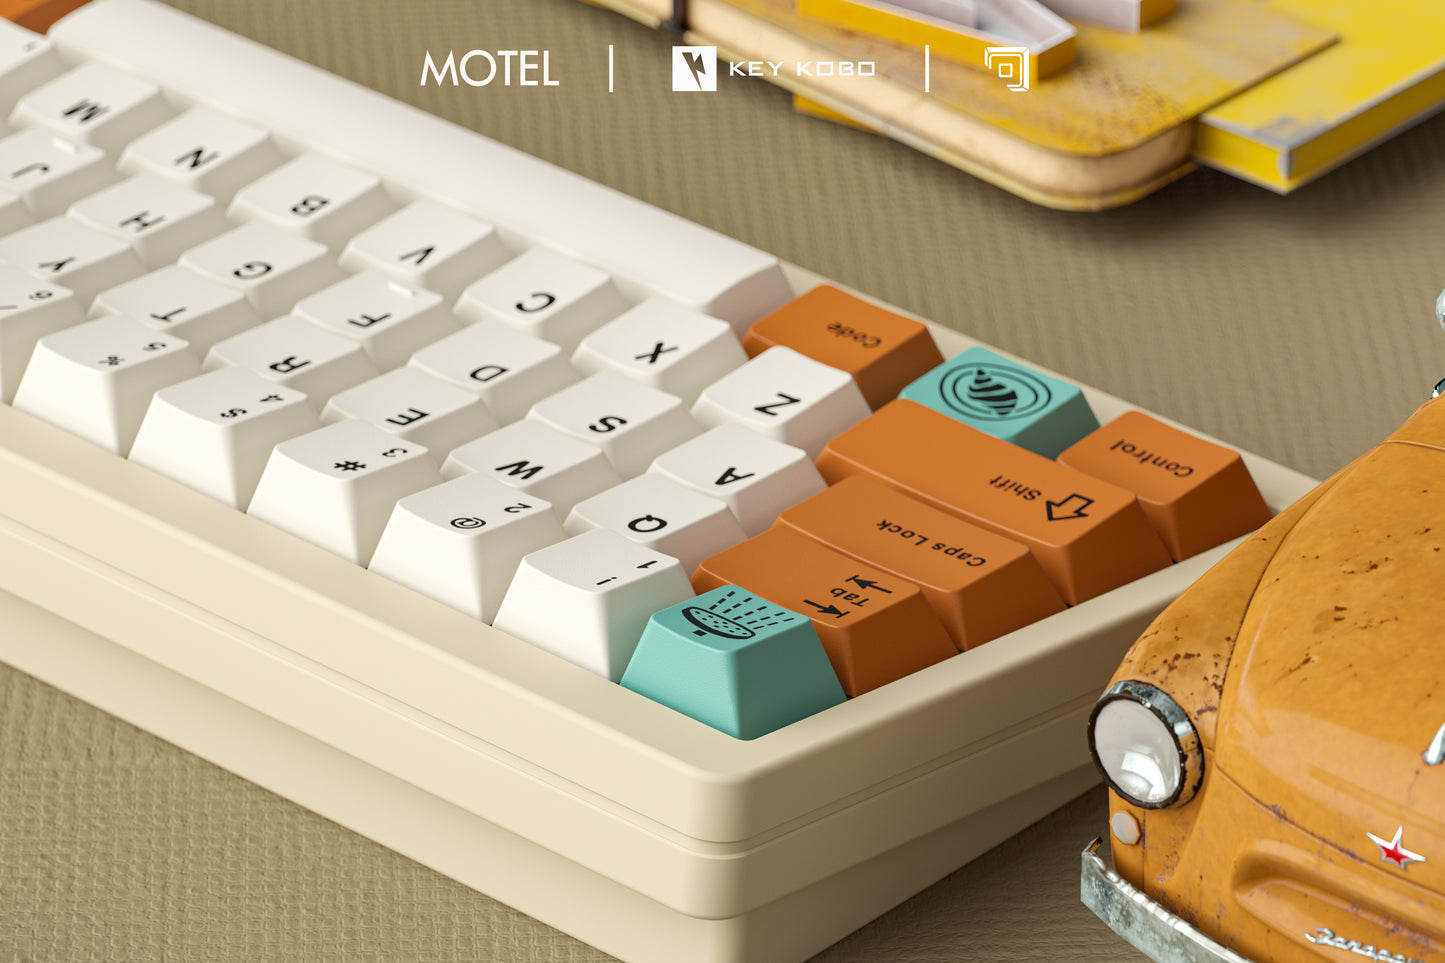 KeyKobo Motel Keycap Set [In-Stock]